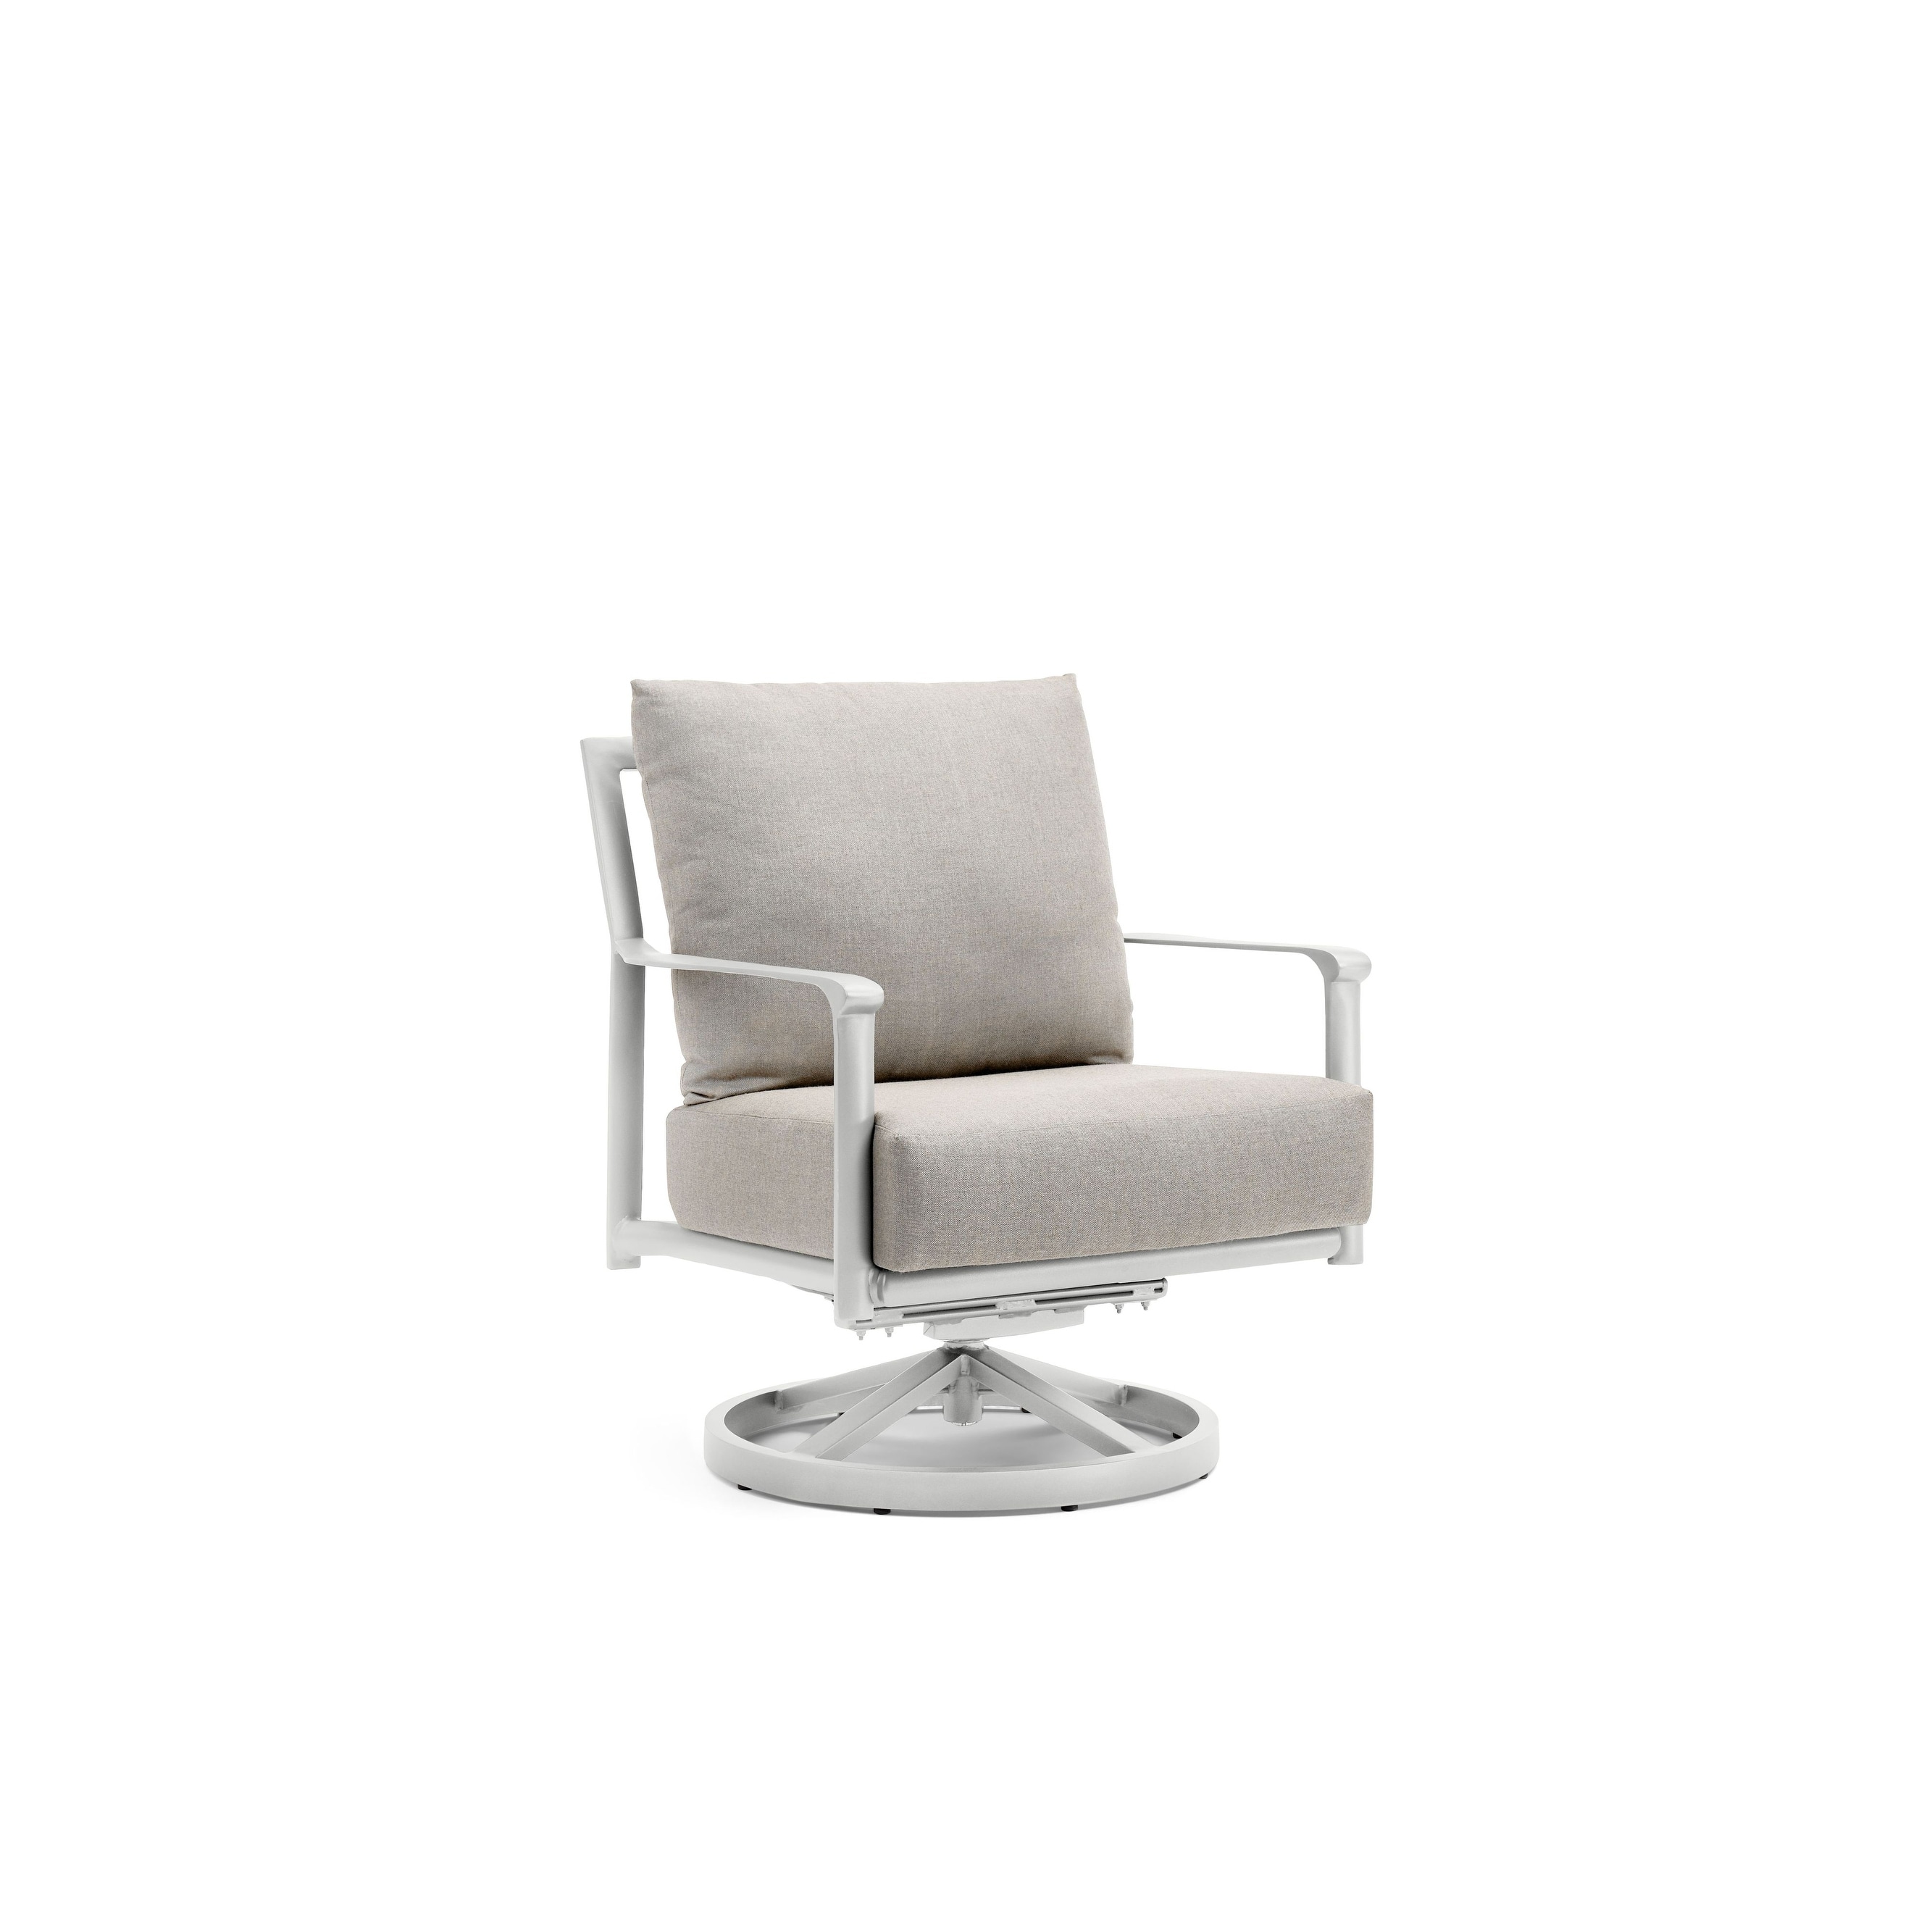 Aspen Cushion Outdoor Resort-grade Sunbrella Swivel Rocker Lounge Chair